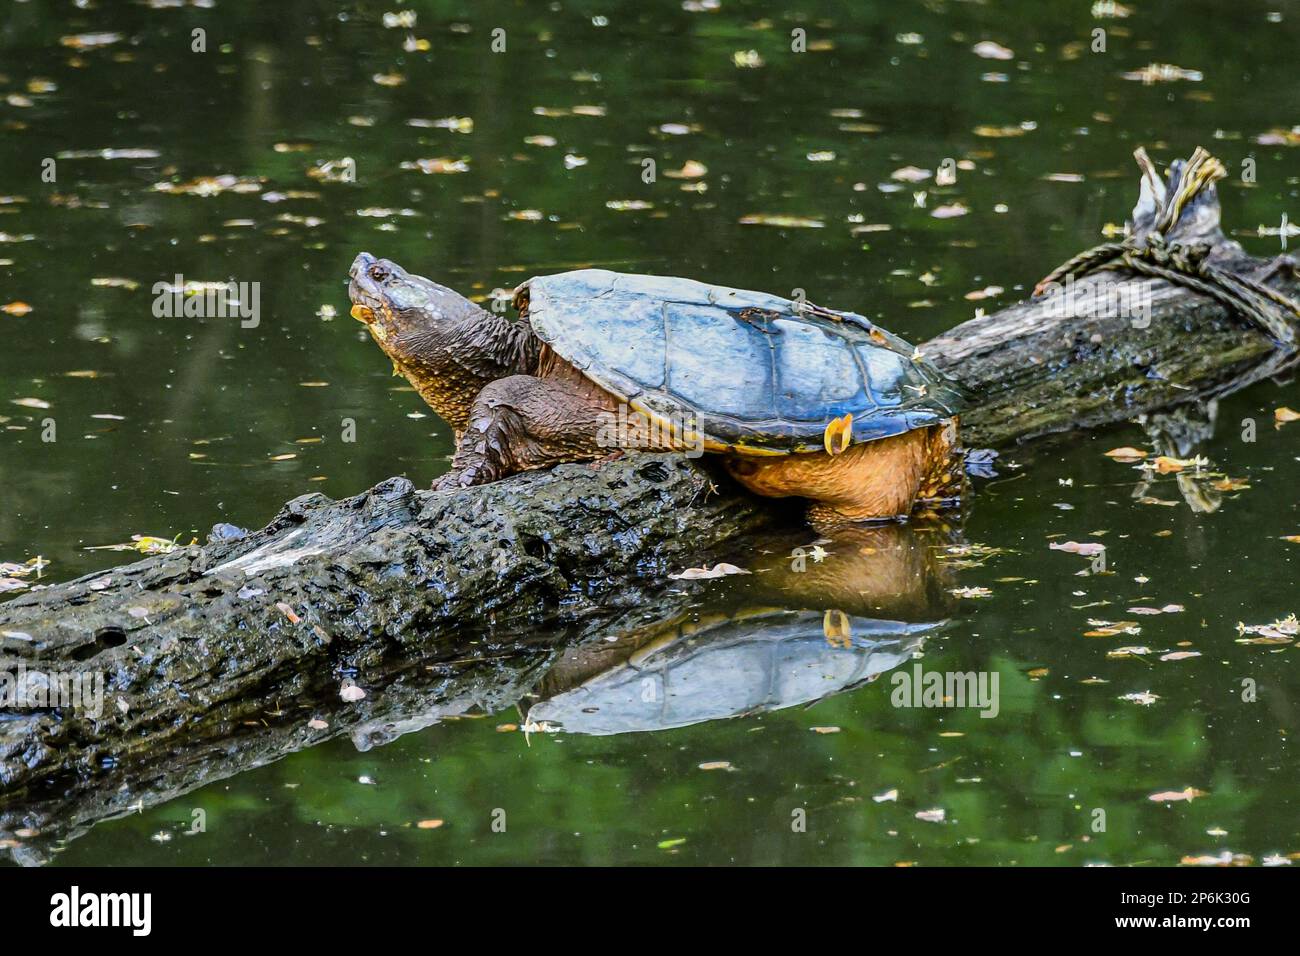 Snapping Turtle Basking in the Spring Sun, York County Pennsylvania USA, Pennsylvania Stock Photo